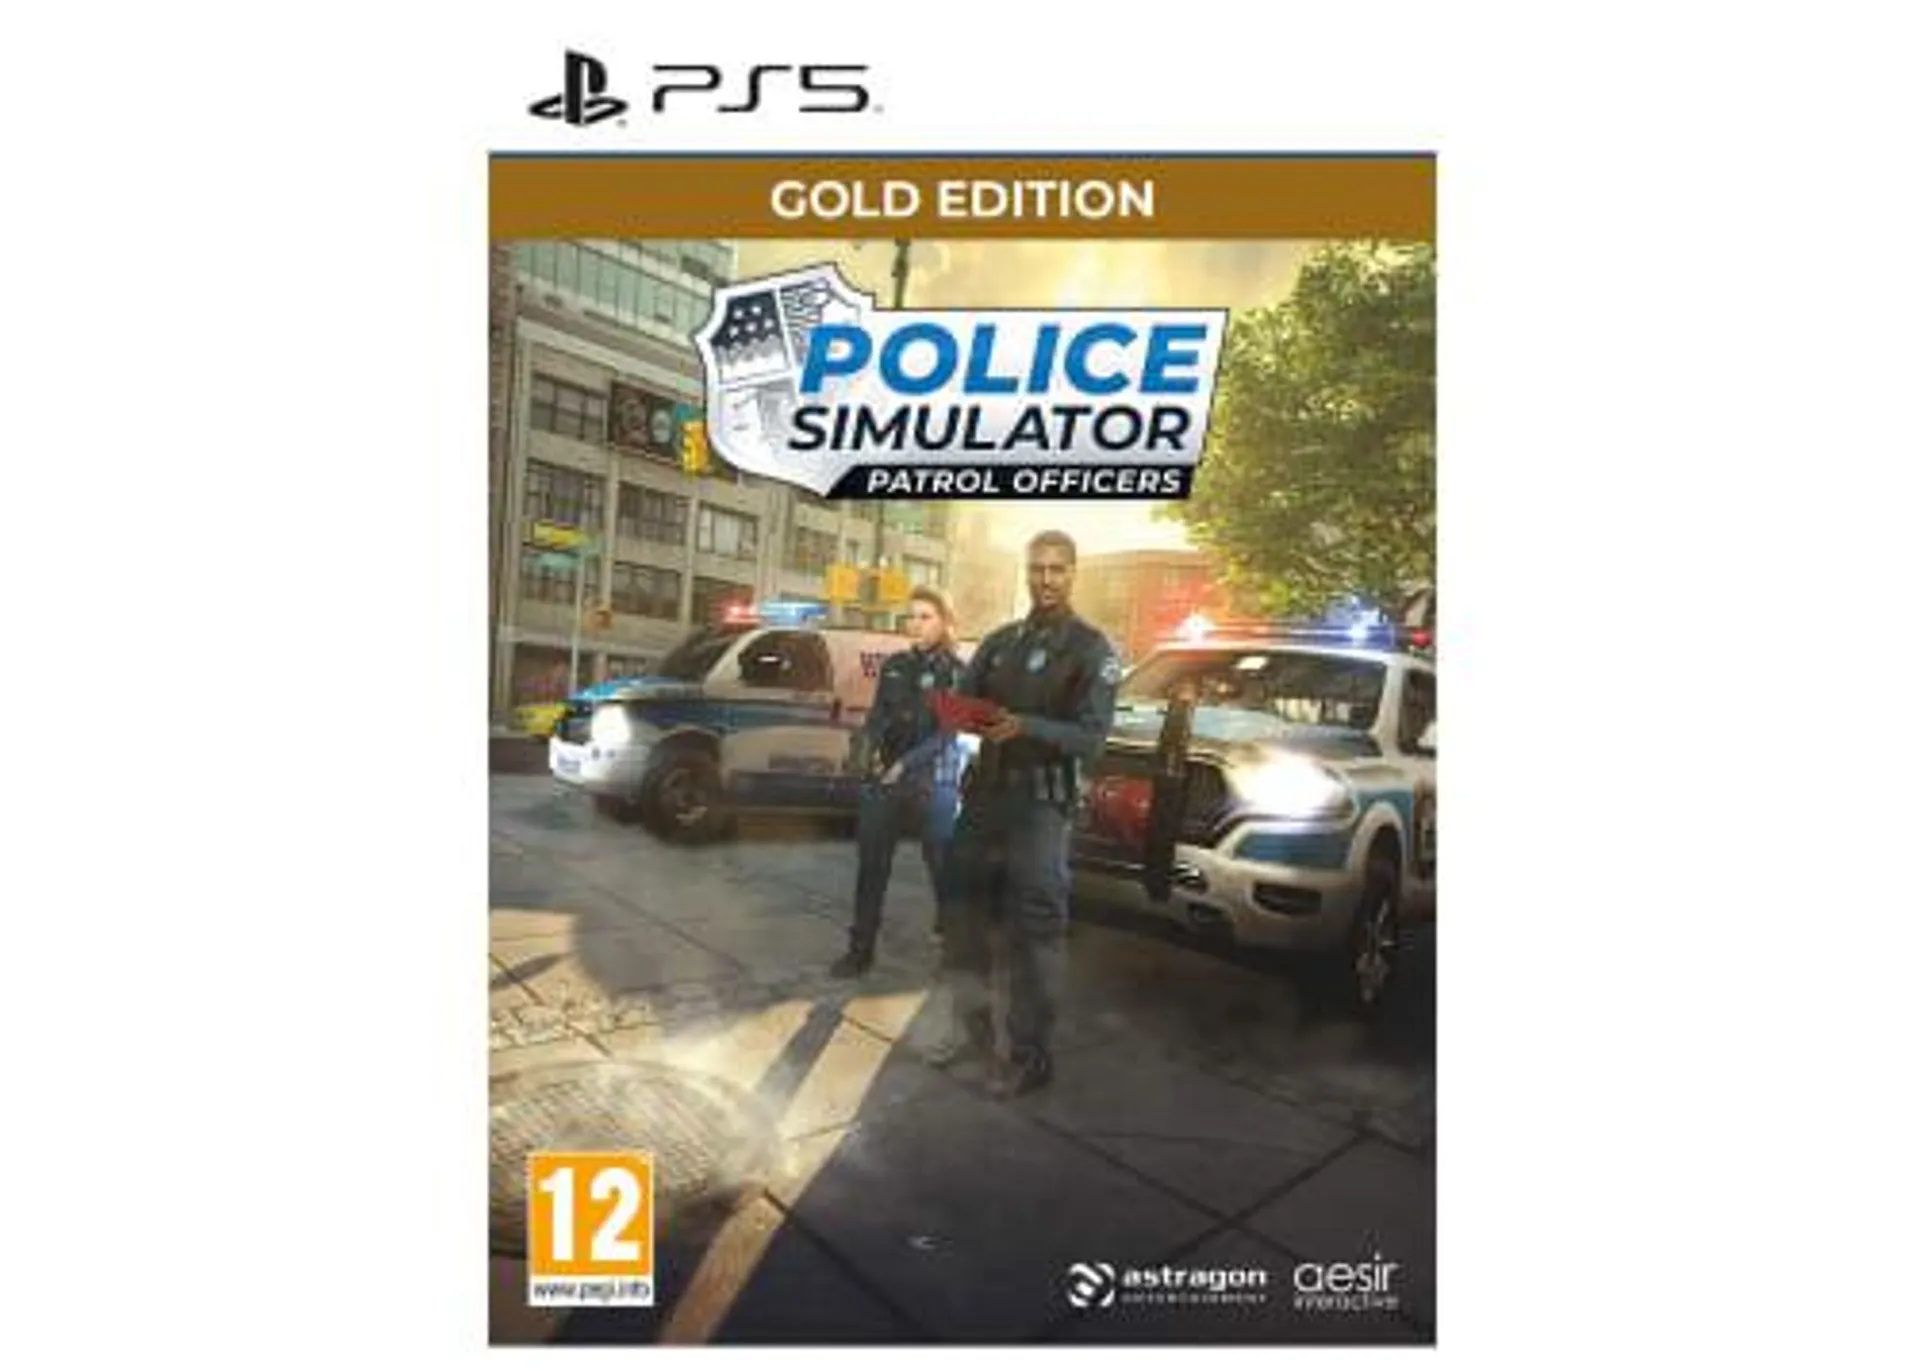 Police Simulator: Patrol Officers - Gold Edition (PlayStation 5)